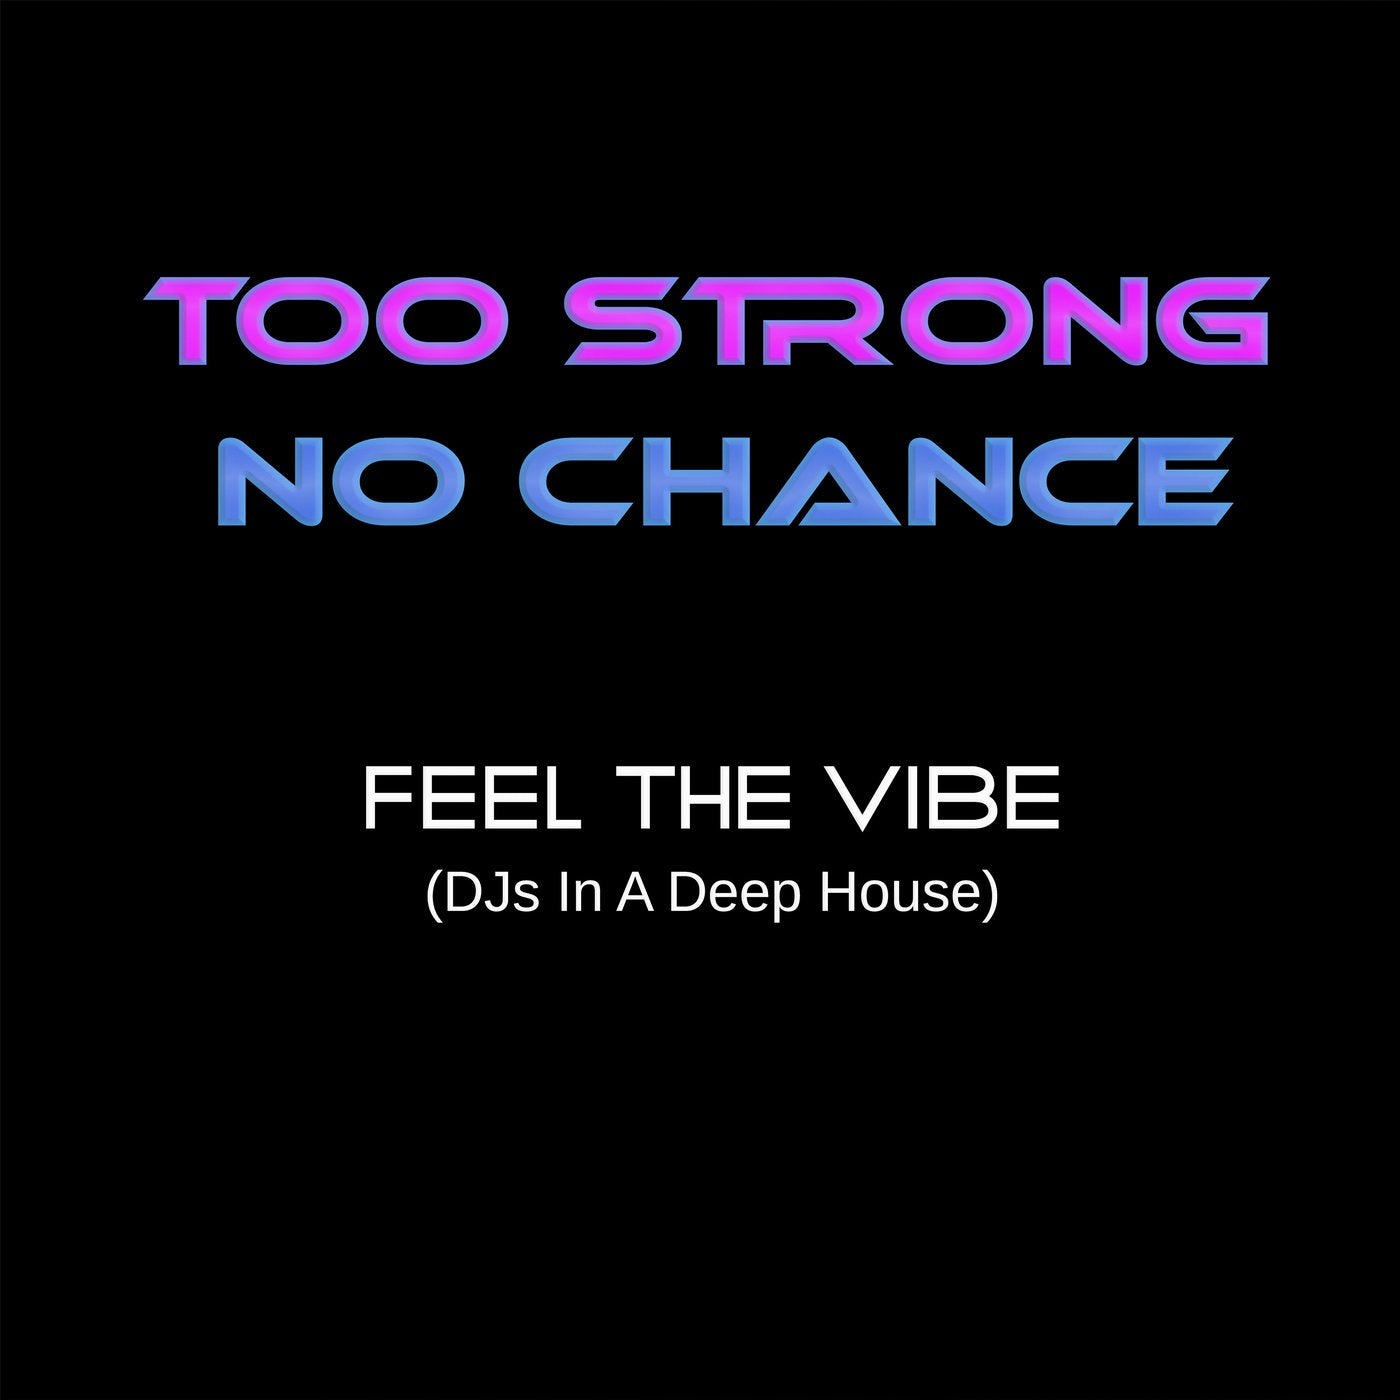 Feel the Vibe DJ's in a Deep House ( DJ N-Joy Instrudubmental Mix)